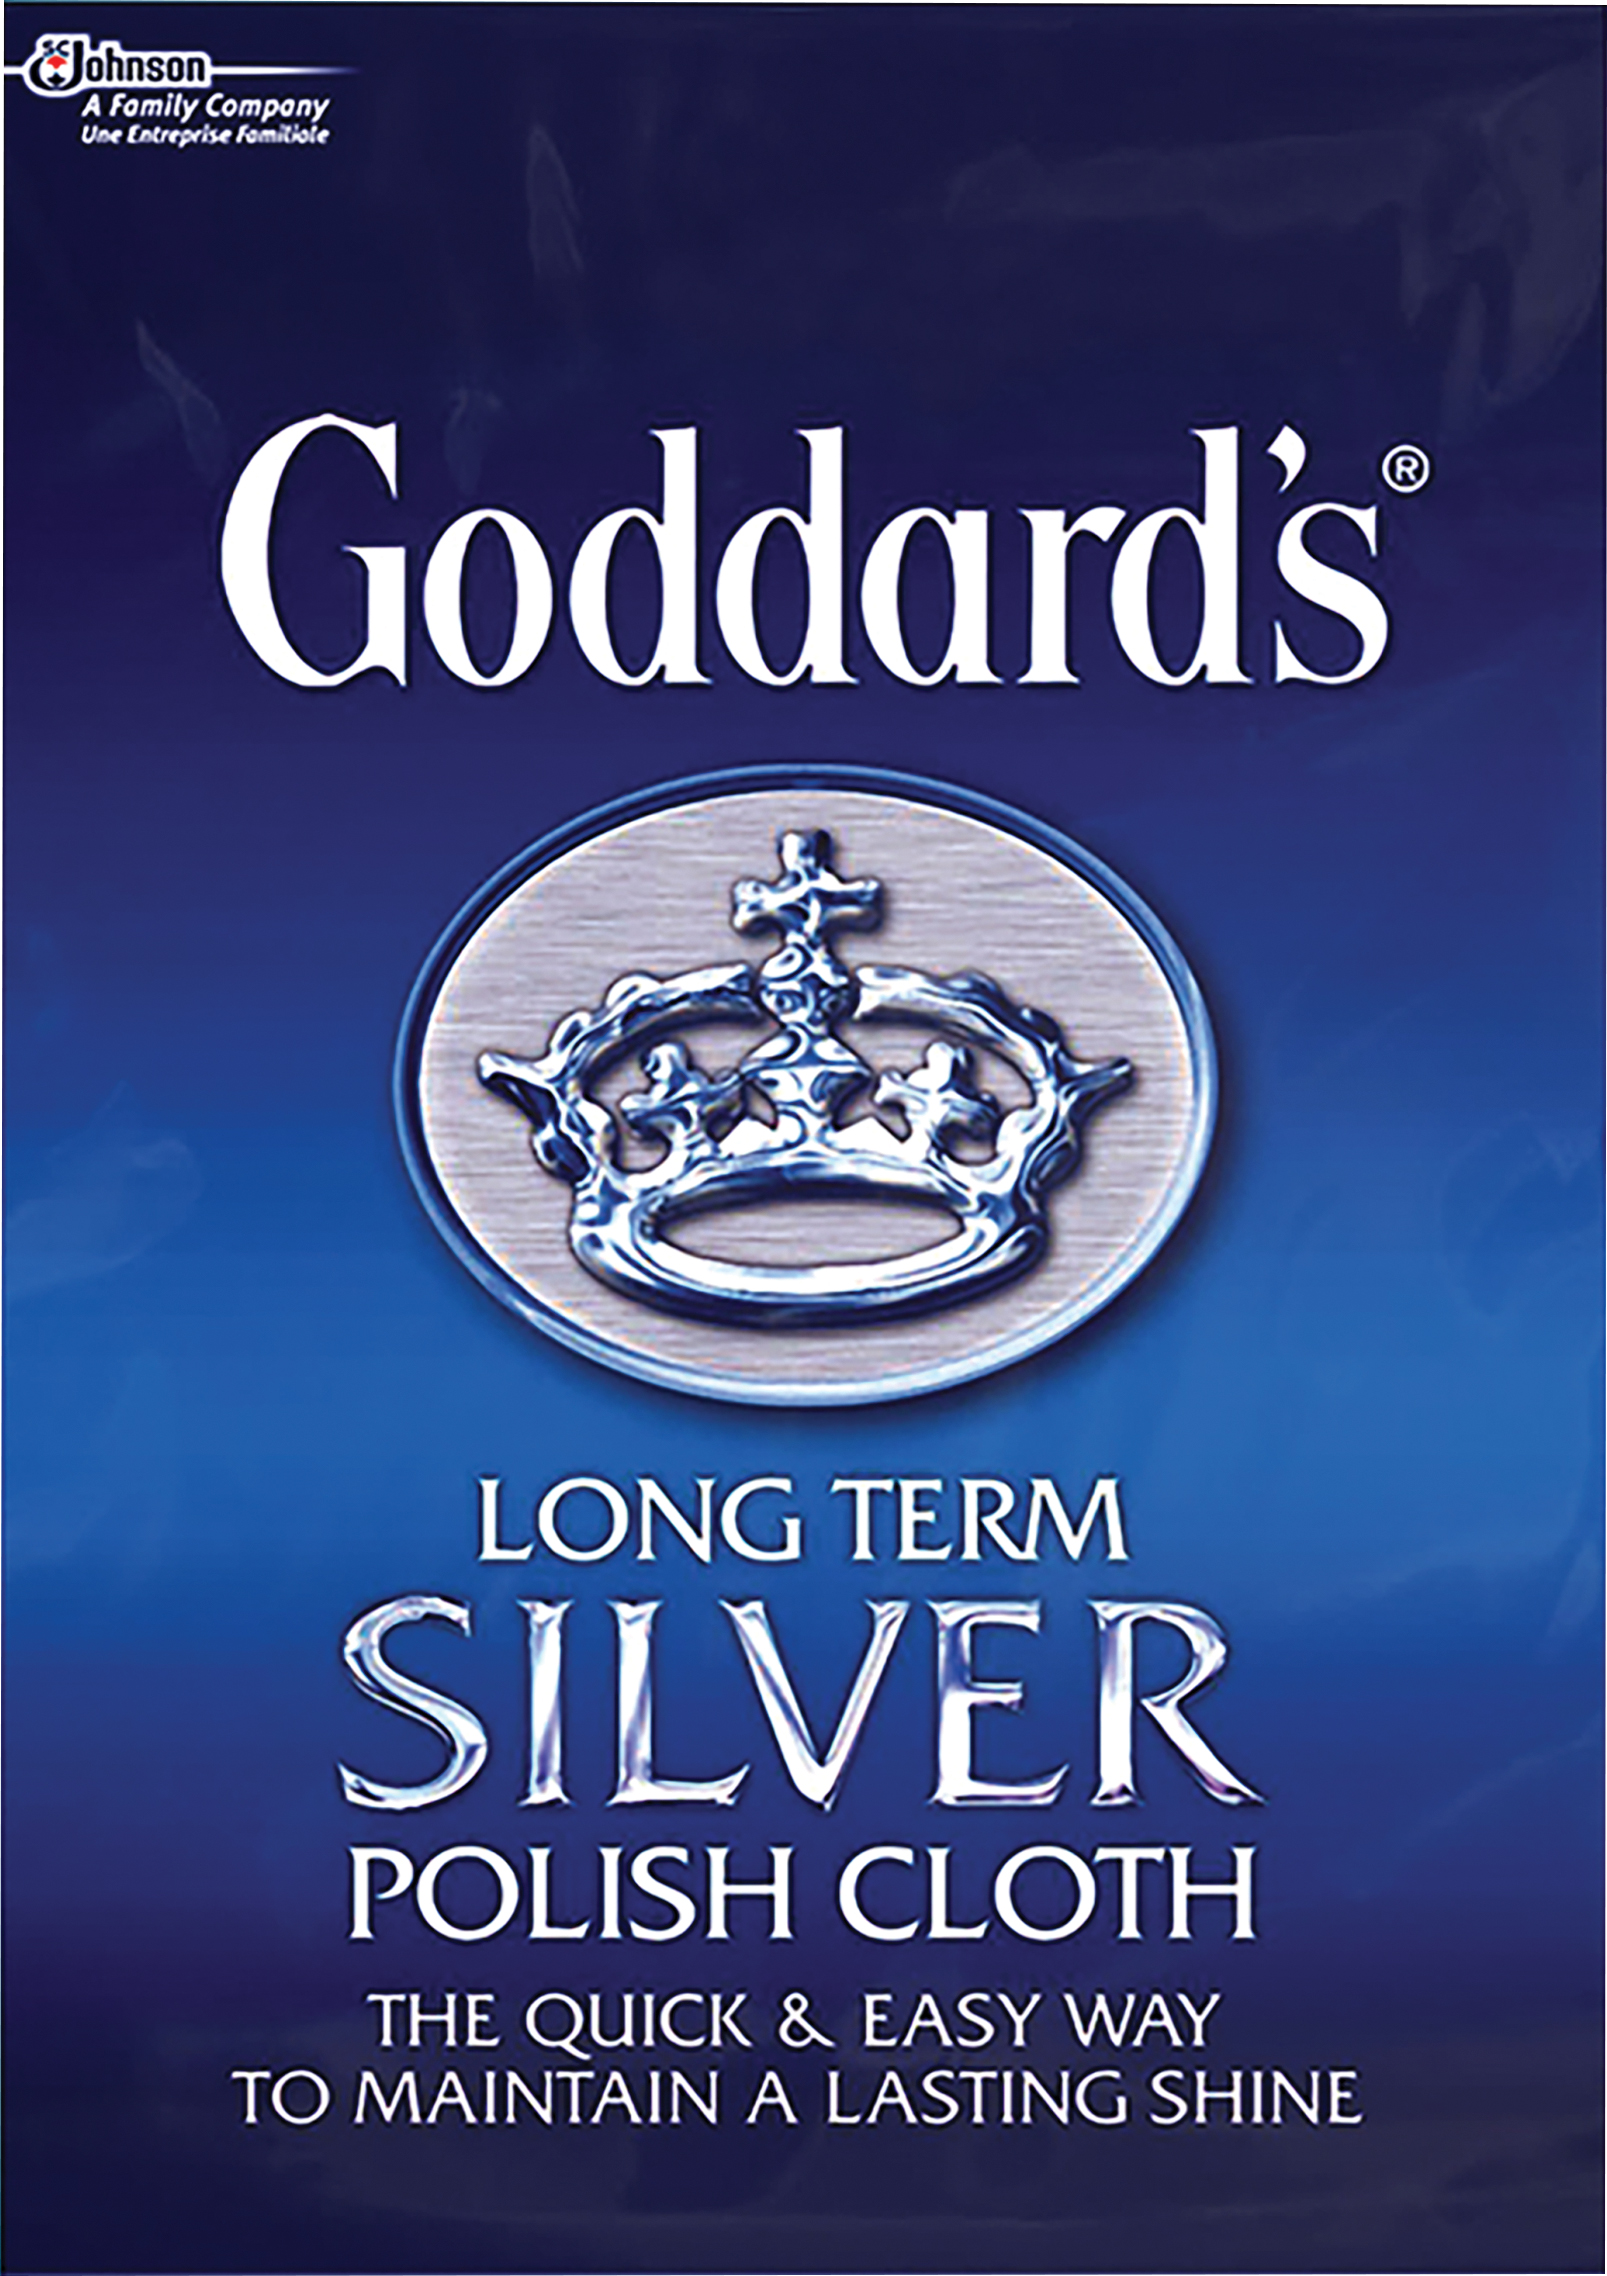 Goddard's Silver Polish 